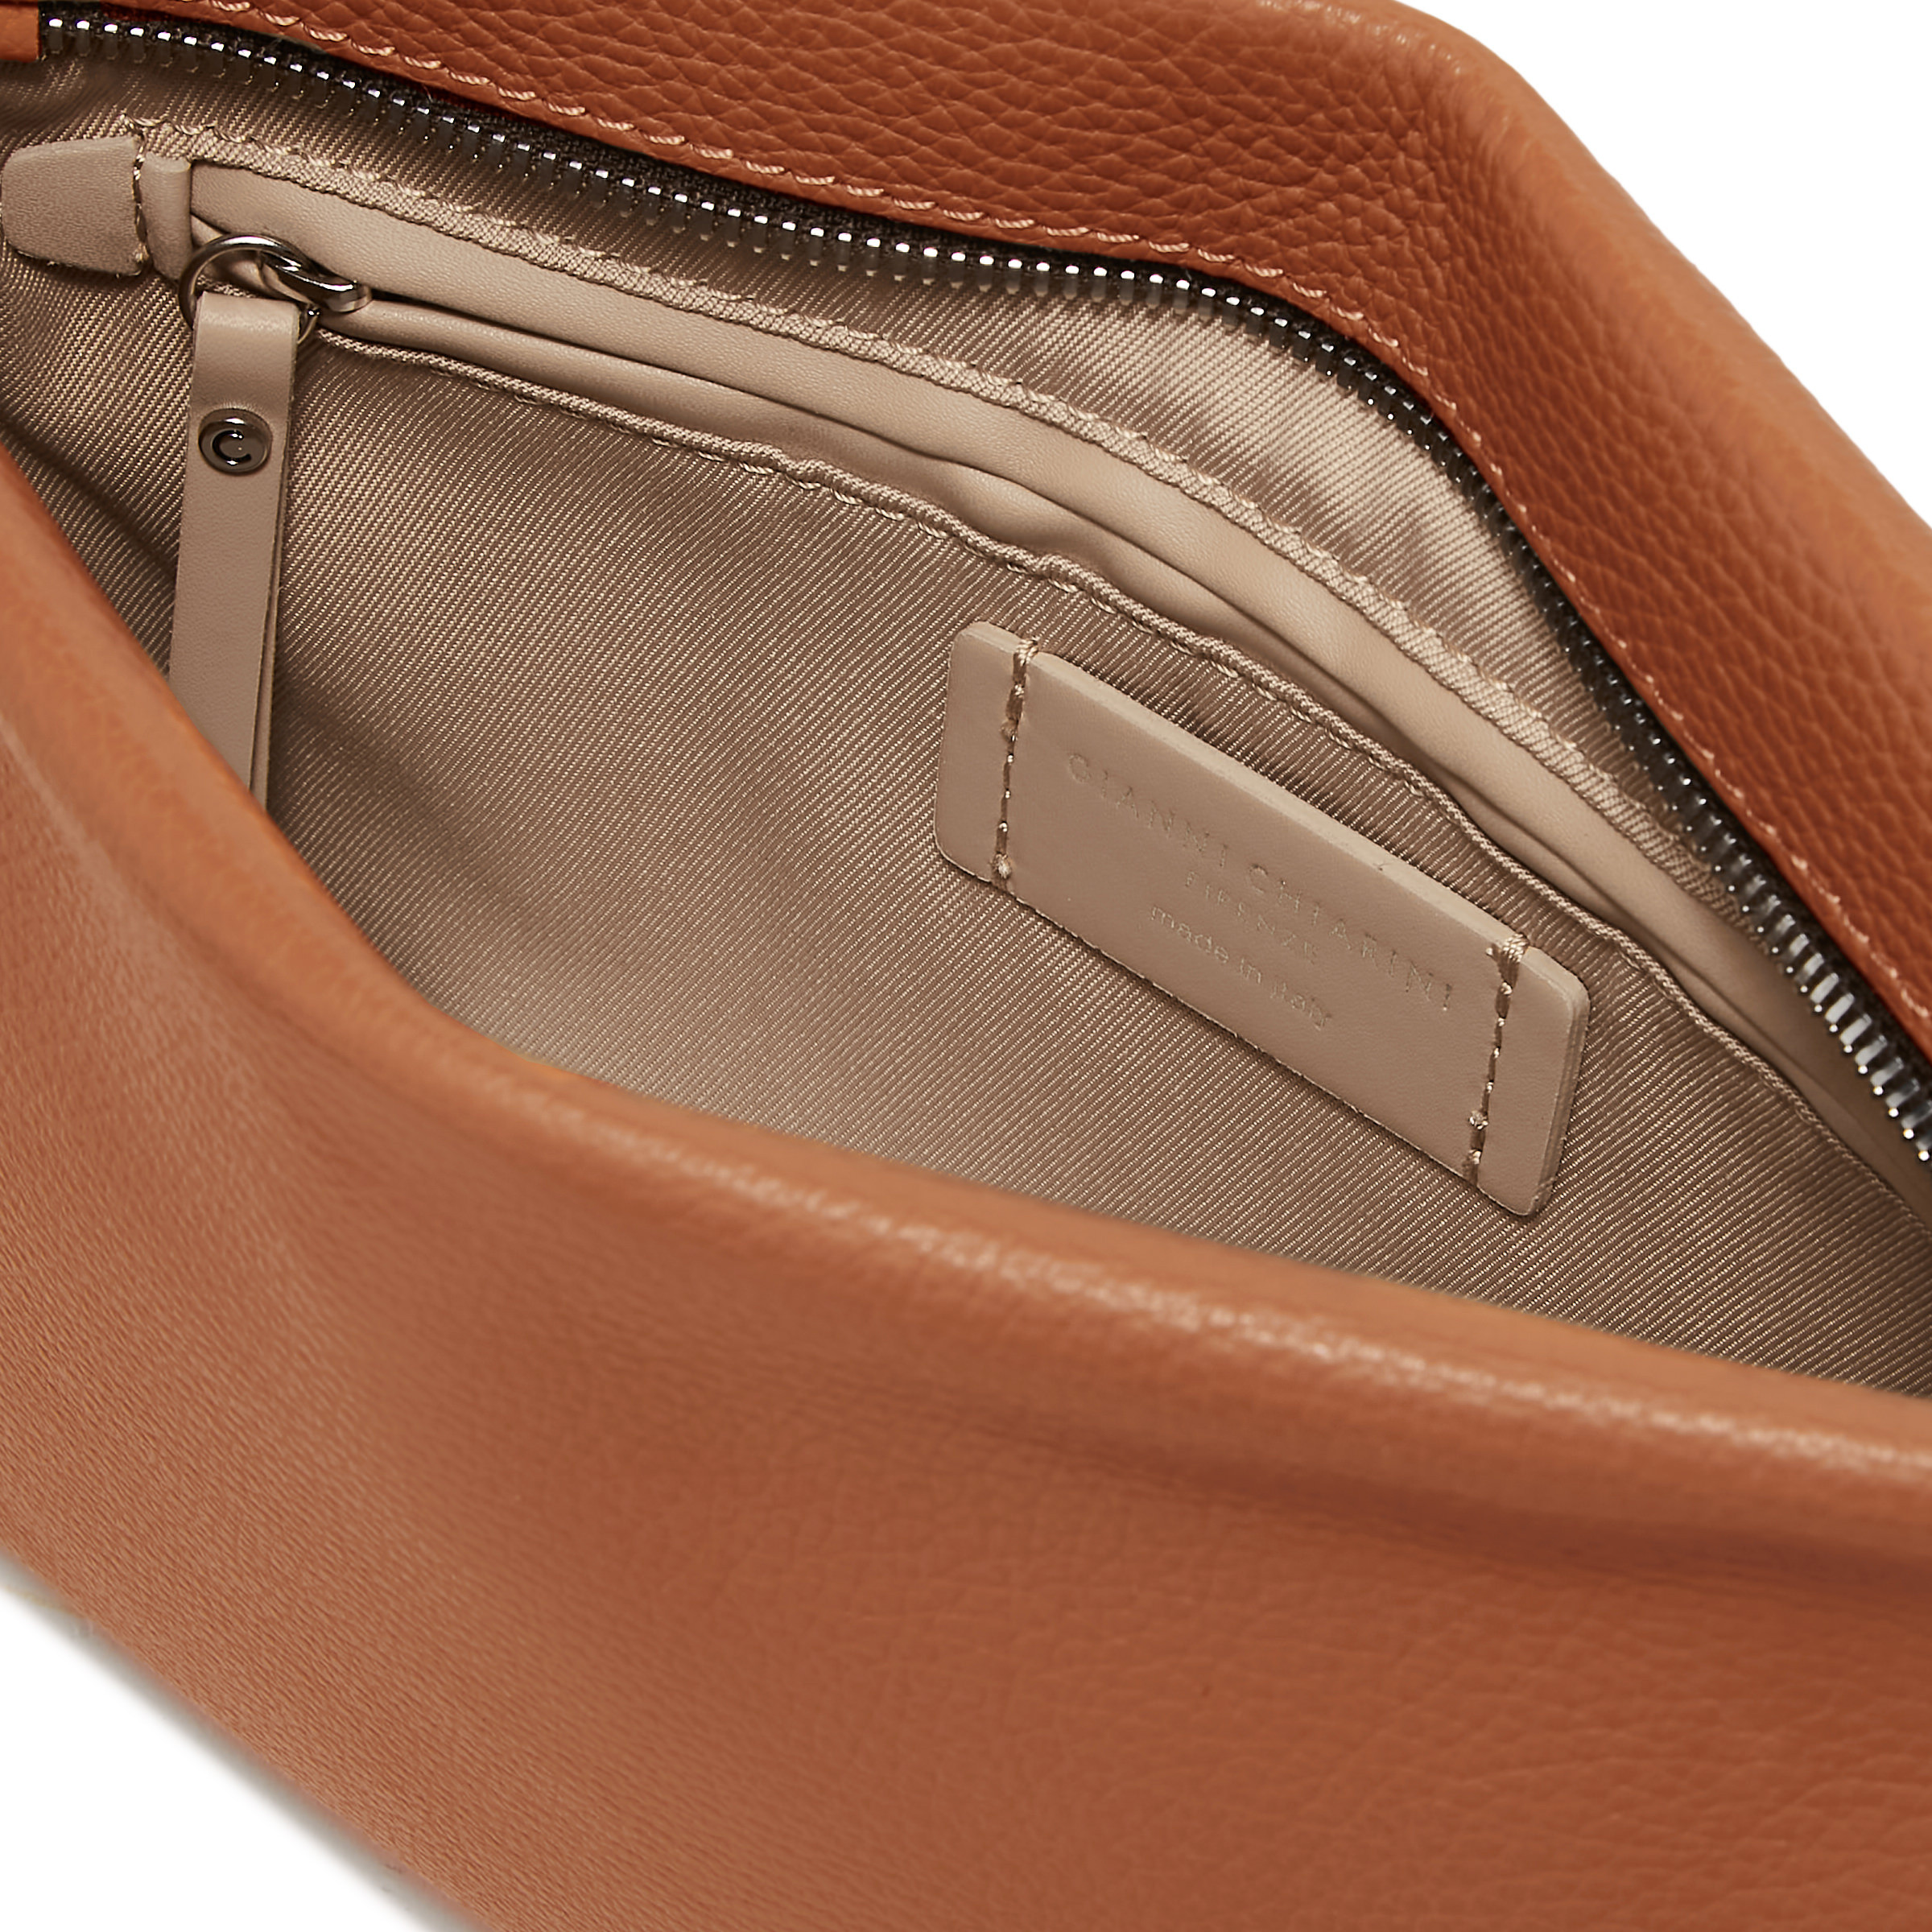 Gianni Chiarini - Brenda leather bag, Brown, large image number 4